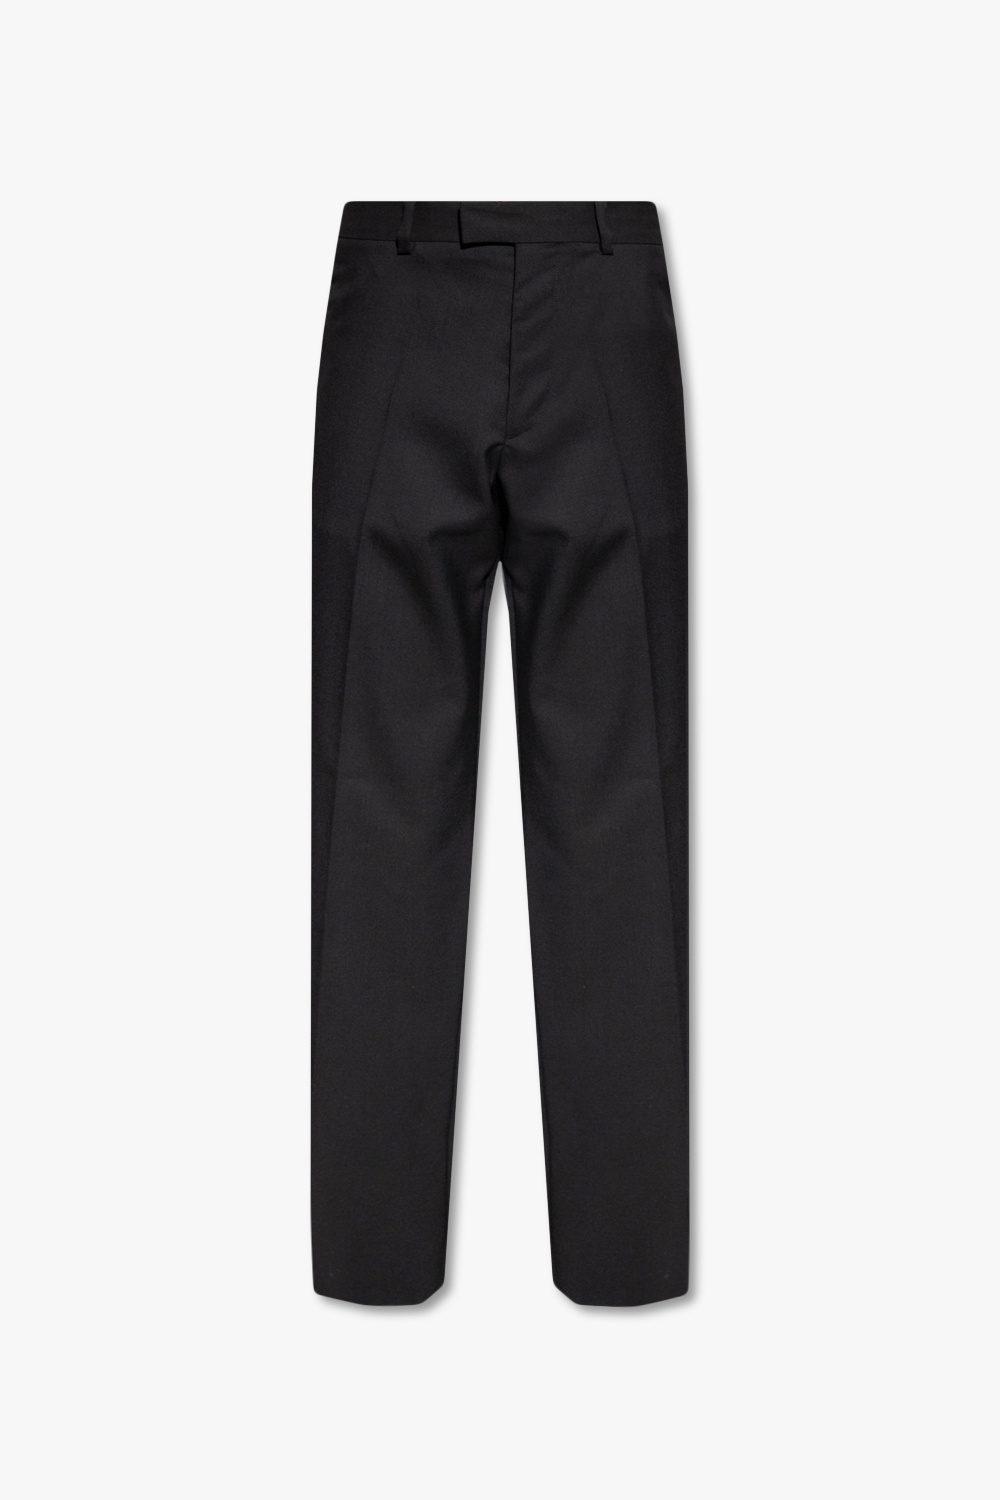 Raf Simons Wool comfortable trousers